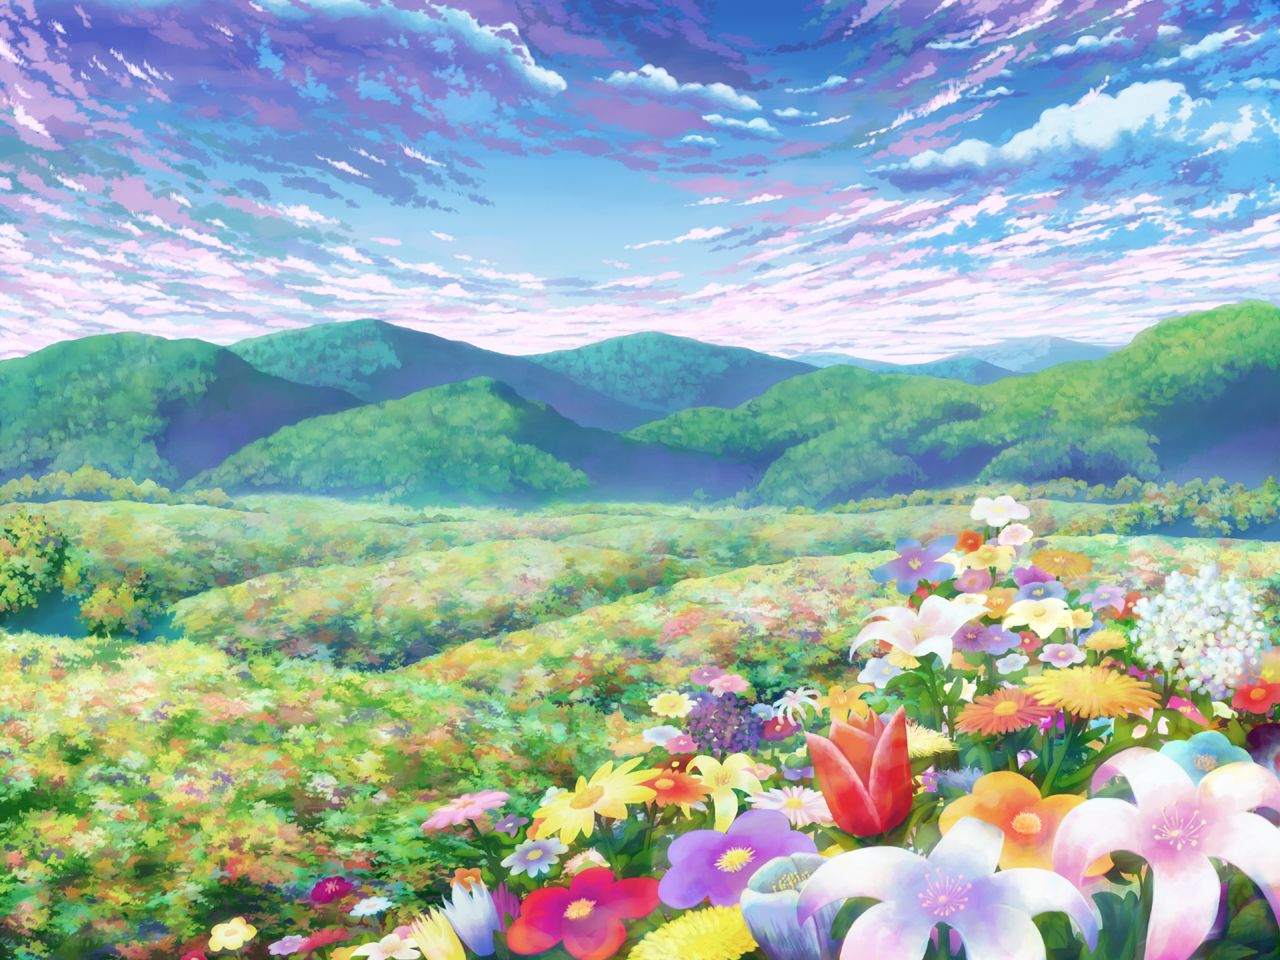 Anime Flower Field Scenery Wallpapers - Wallpaper Cave